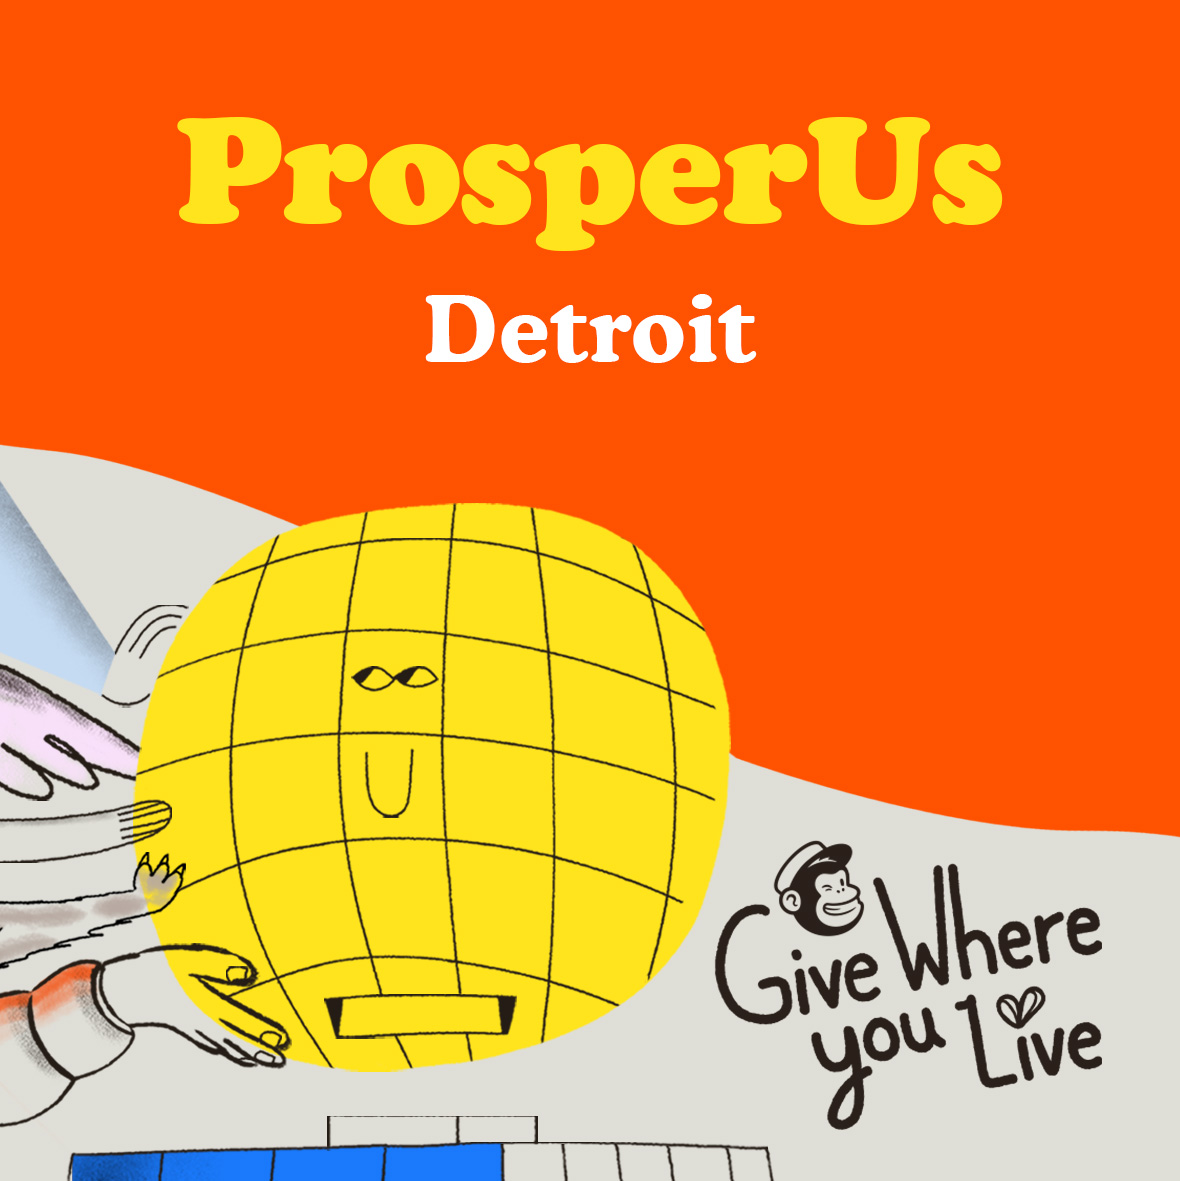 Give Where You Live image featuring ProseprUs Detroit via Mailchimp